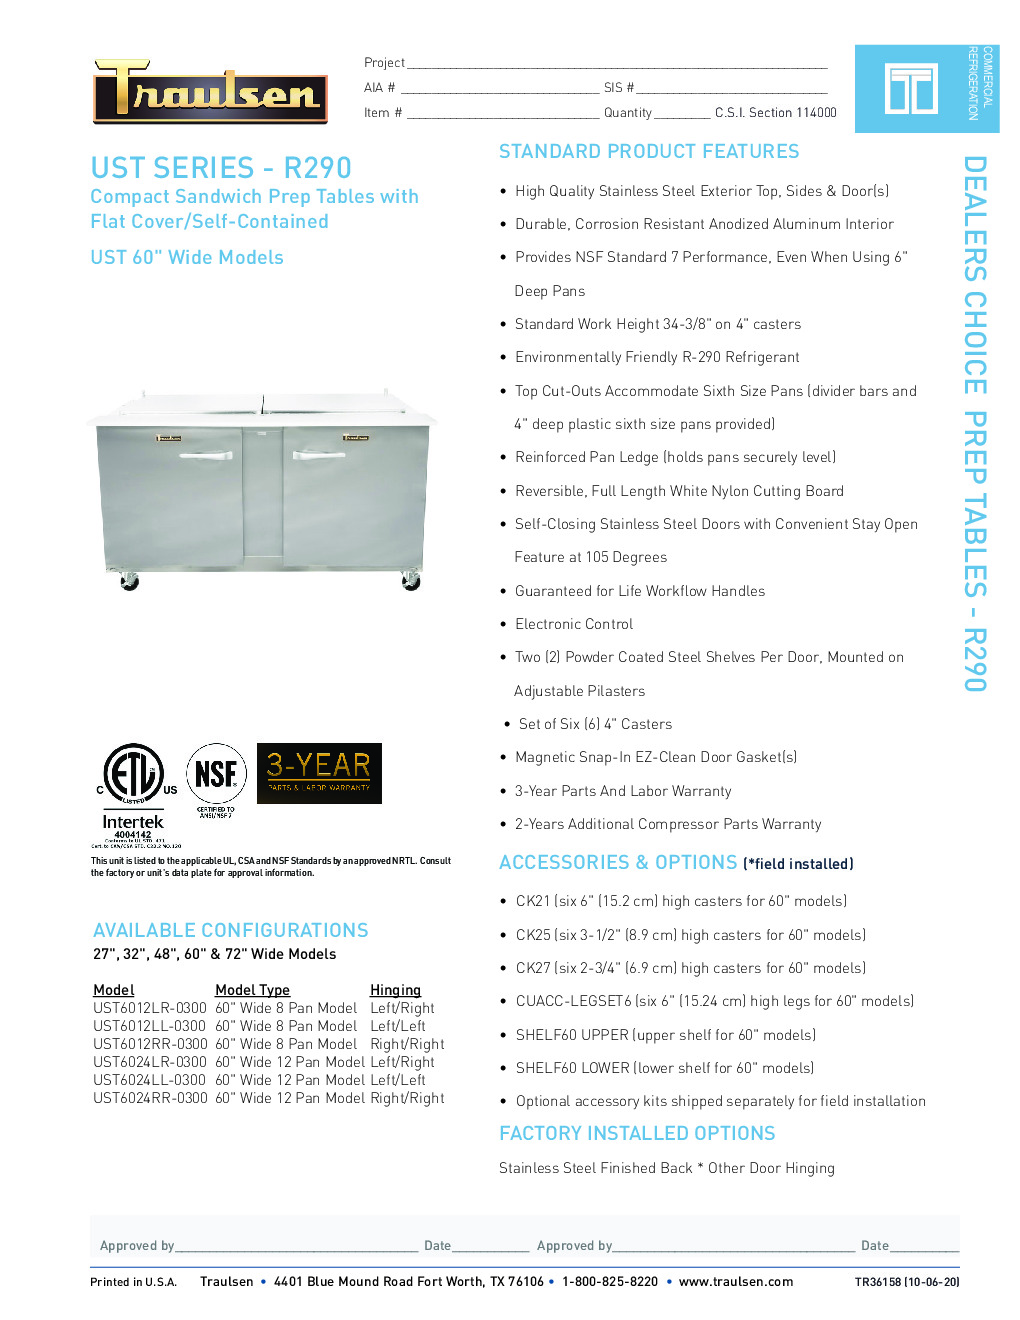 Traulsen UST6012LR-0300-SB Sandwich / Salad Unit Refrigerated Counter